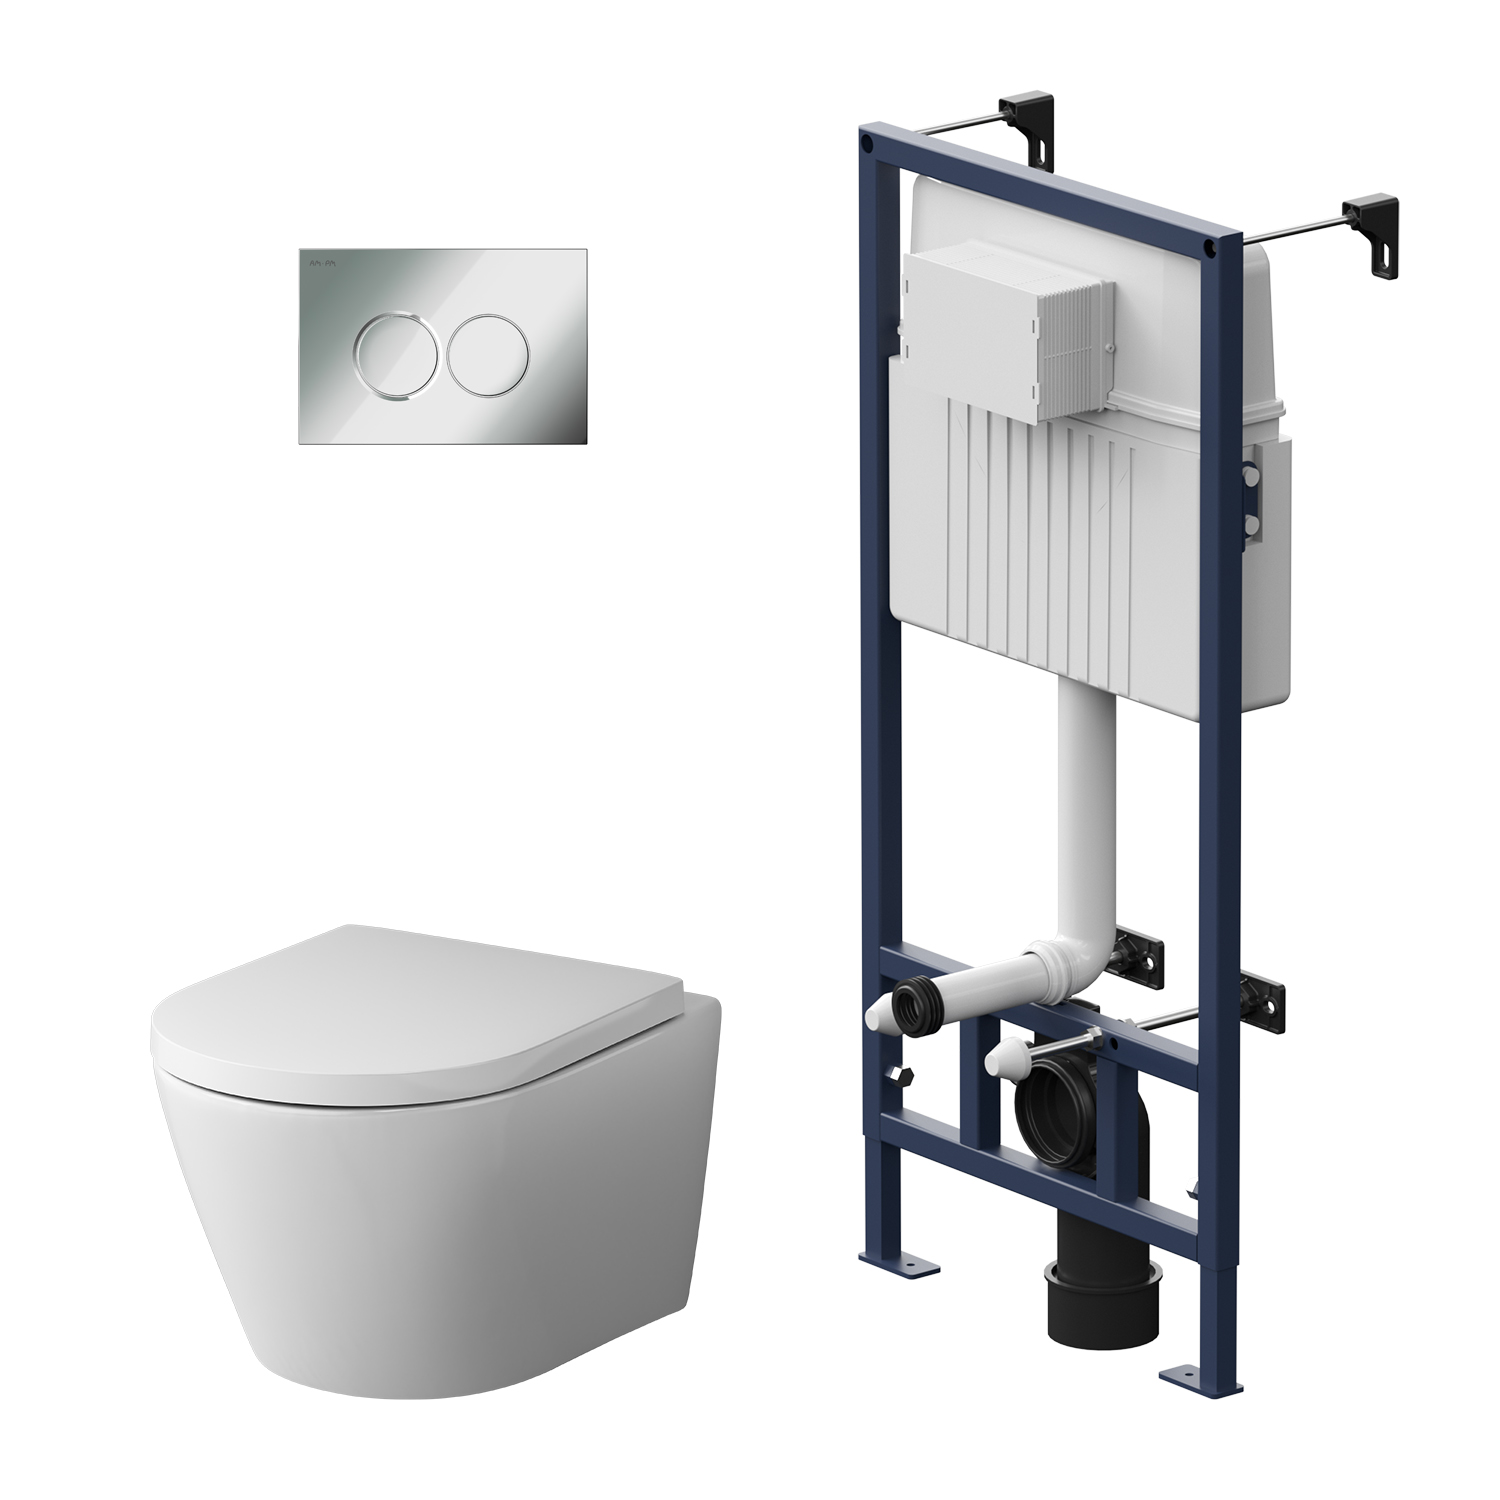 AM.PM Flash toilet set with dual flush tank